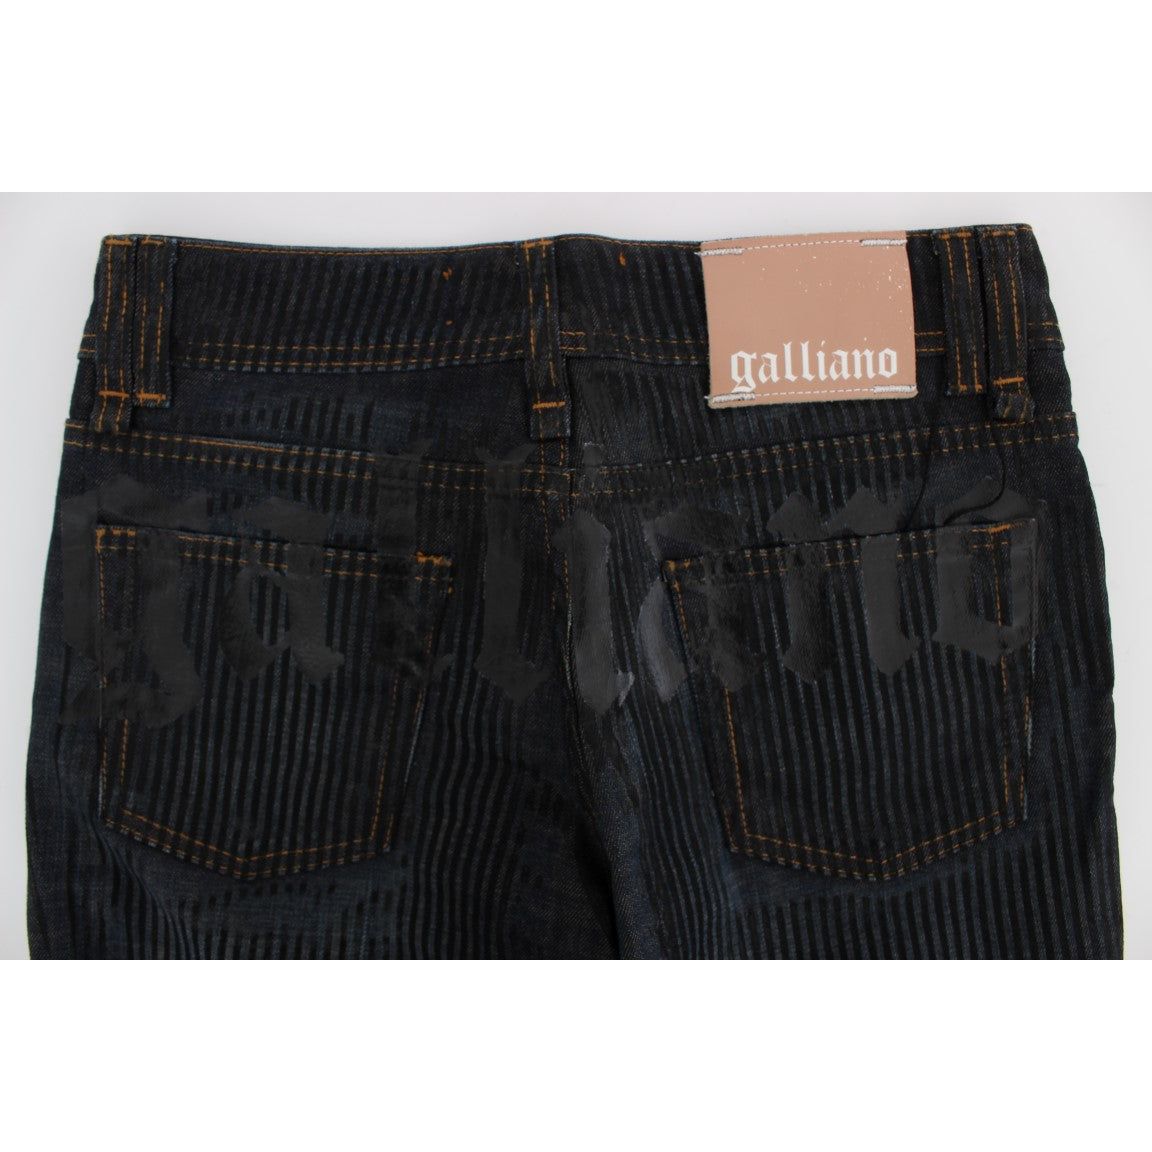 John Galliano Chic Slim Fit Bootcut Designer Jeans blue-wash-cotton-blend-slim-fit-bootcut-jeans-3